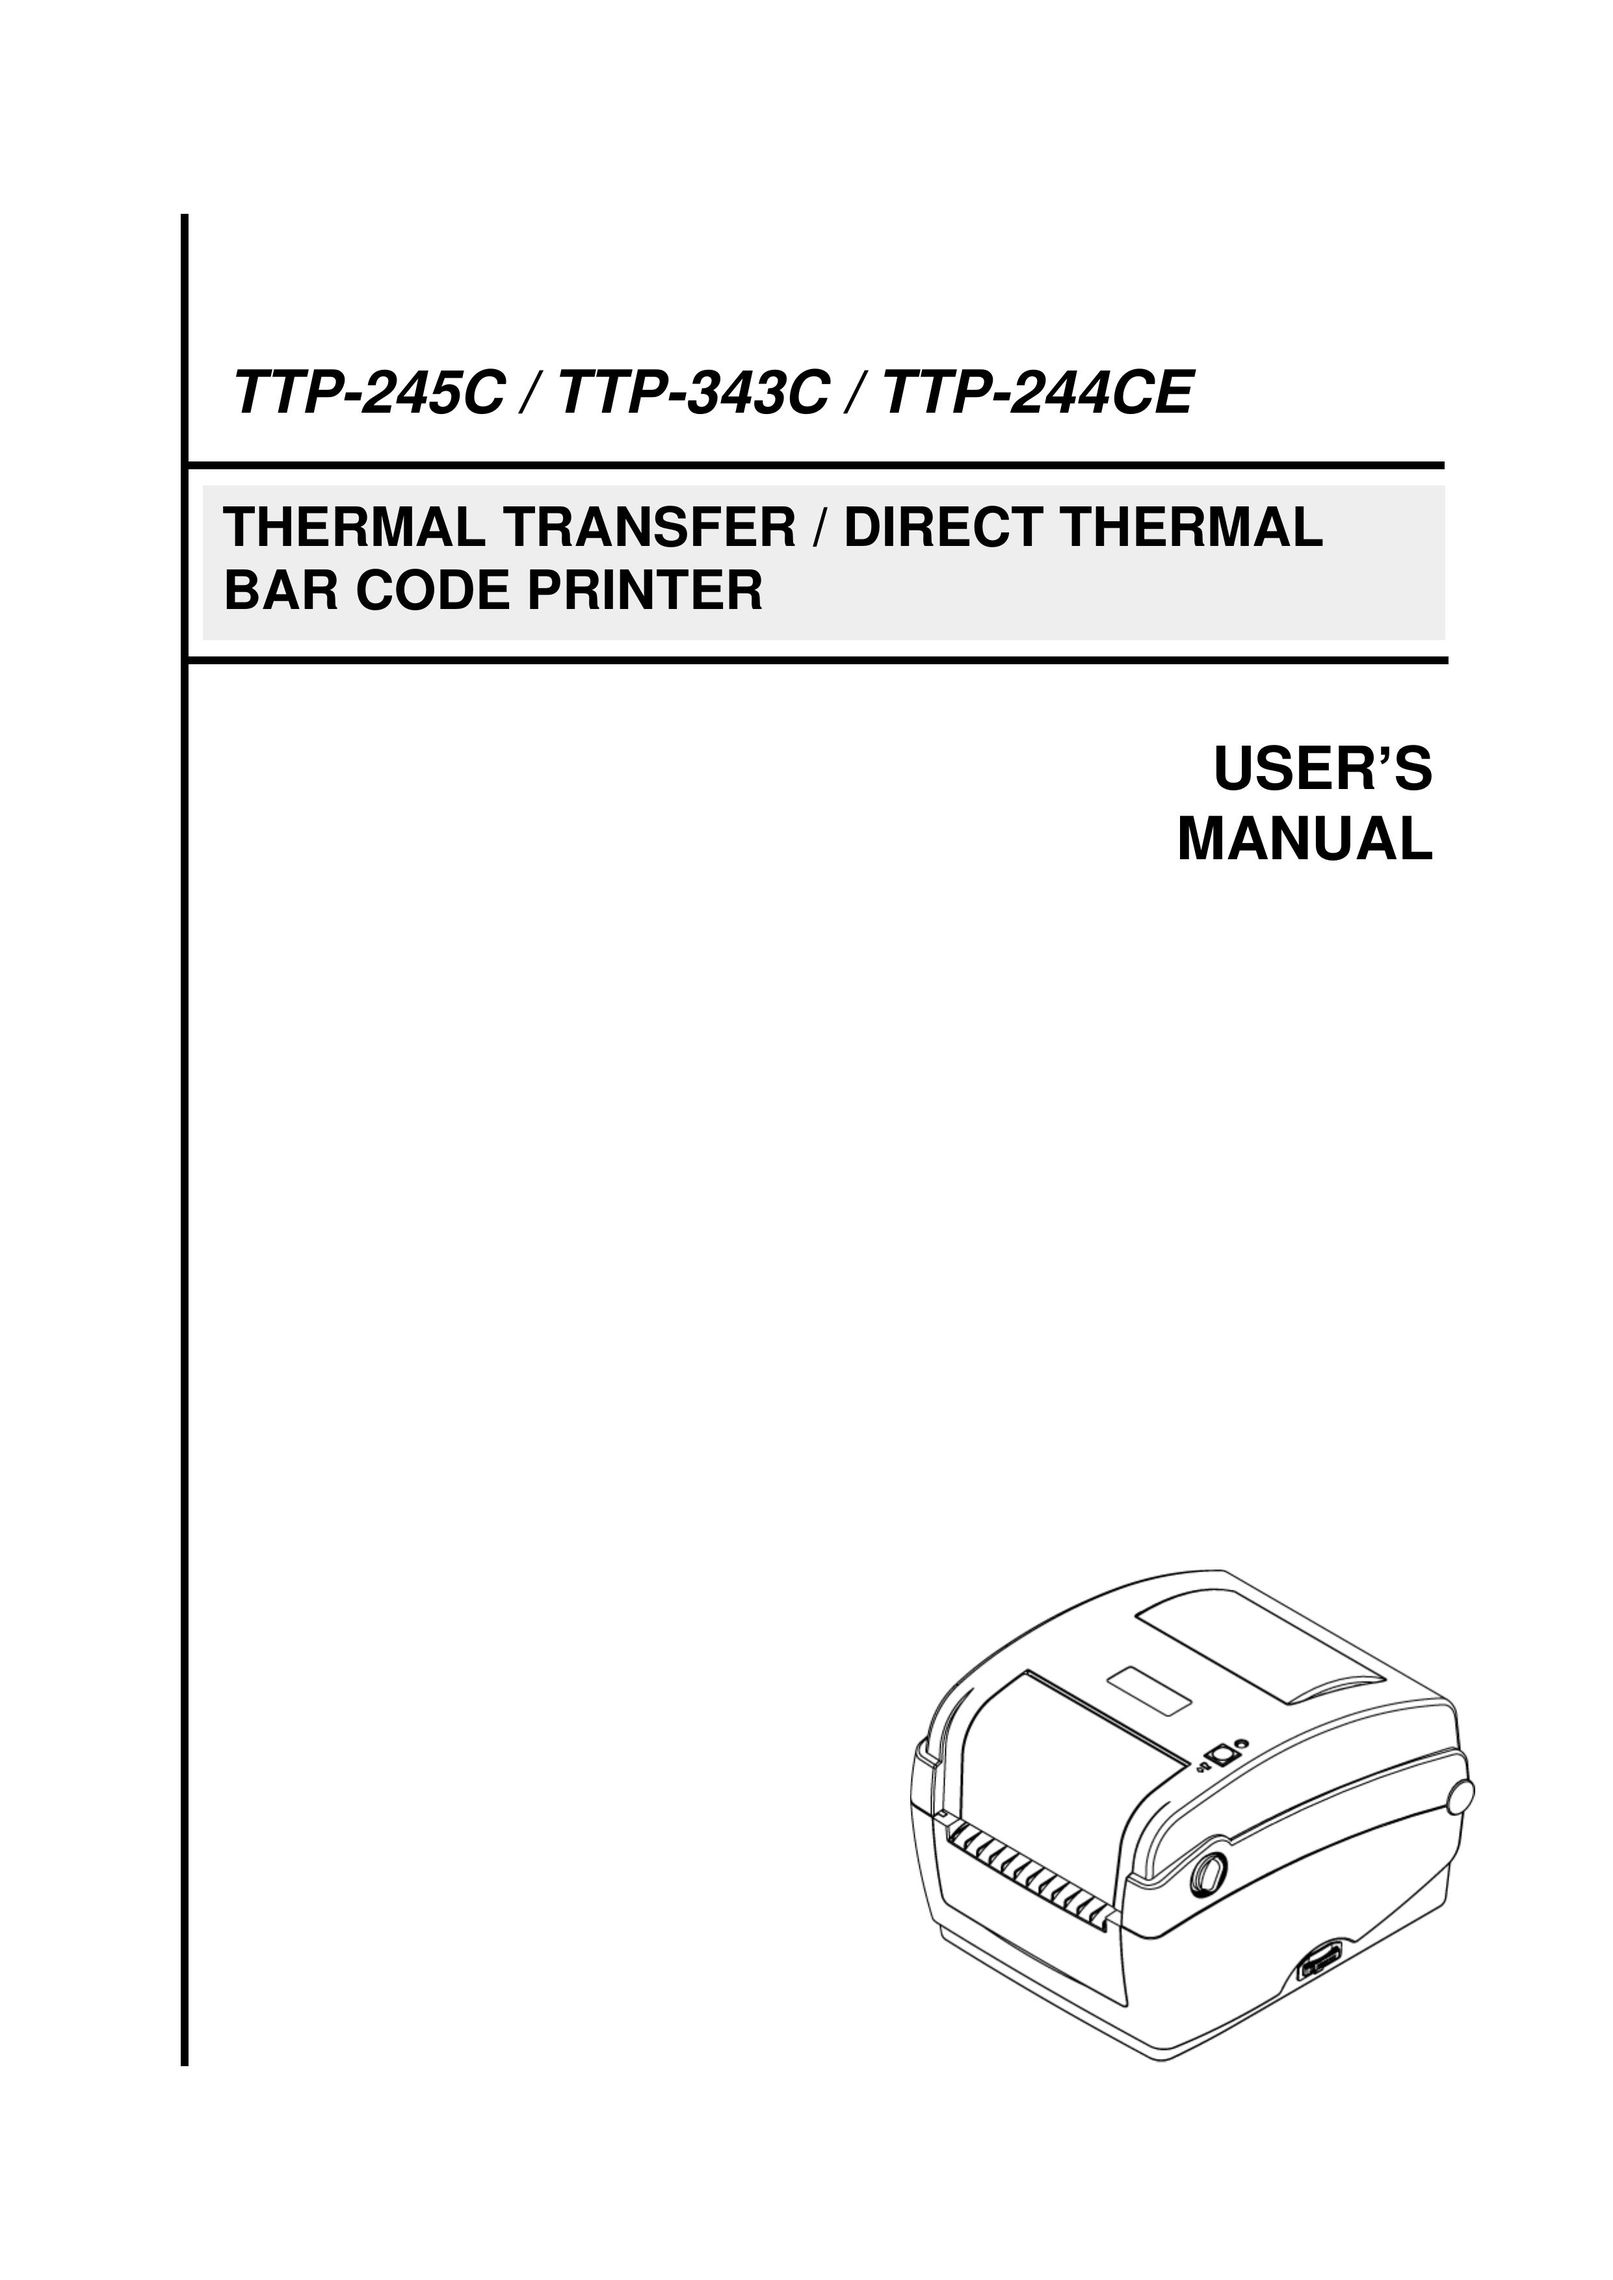 The Speaker Company TTP-245C Printer User Manual